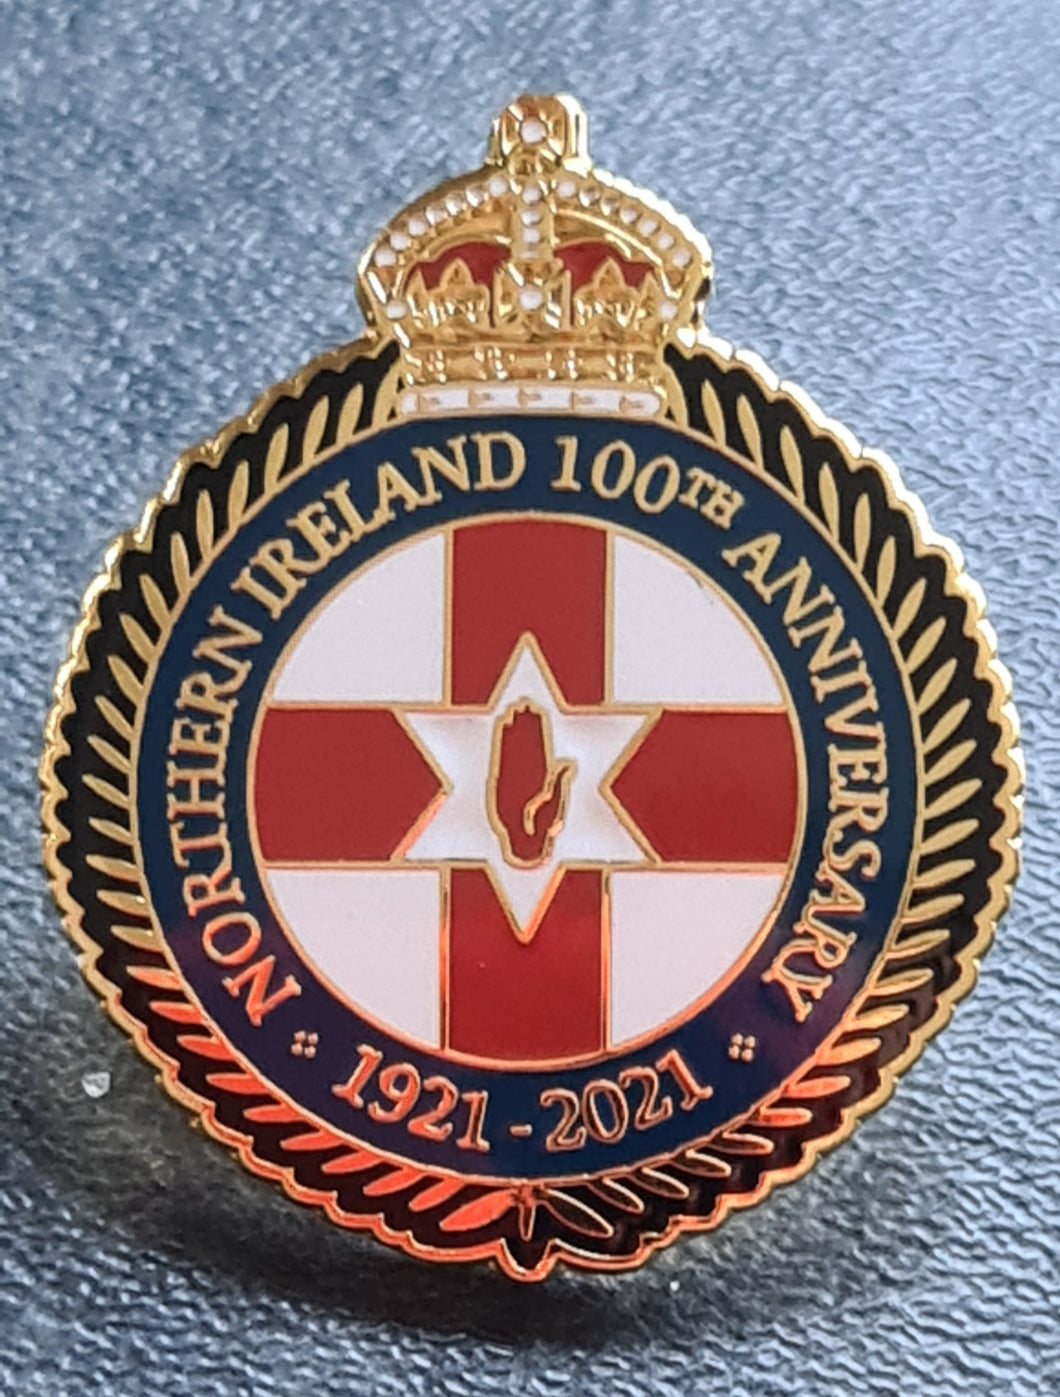 Northern Ireland 100th Anniversary Pin Badge